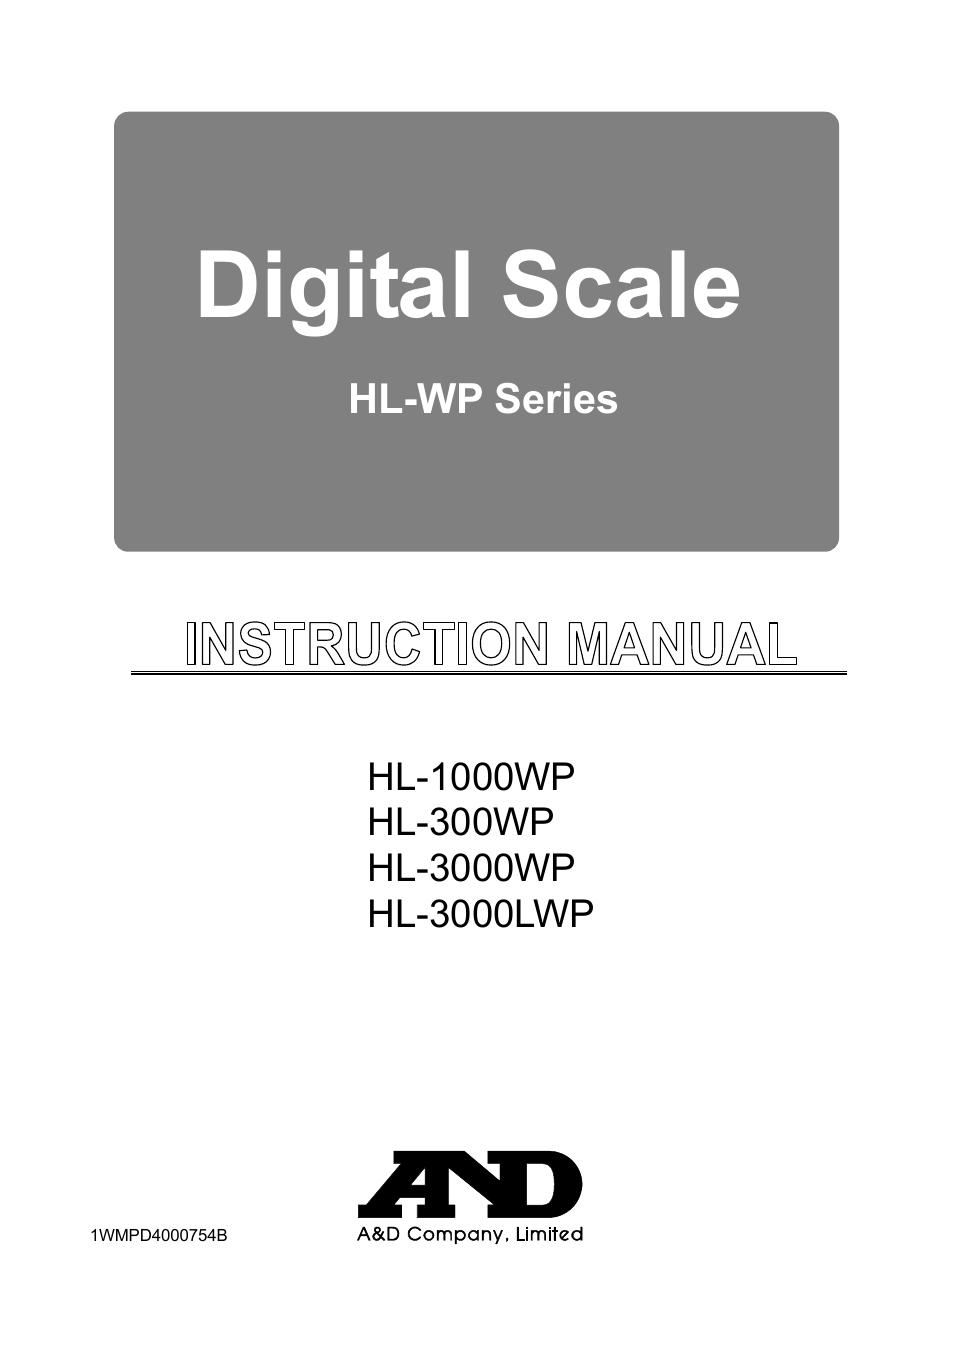 Digital Scale HL-300WP (Page 1)